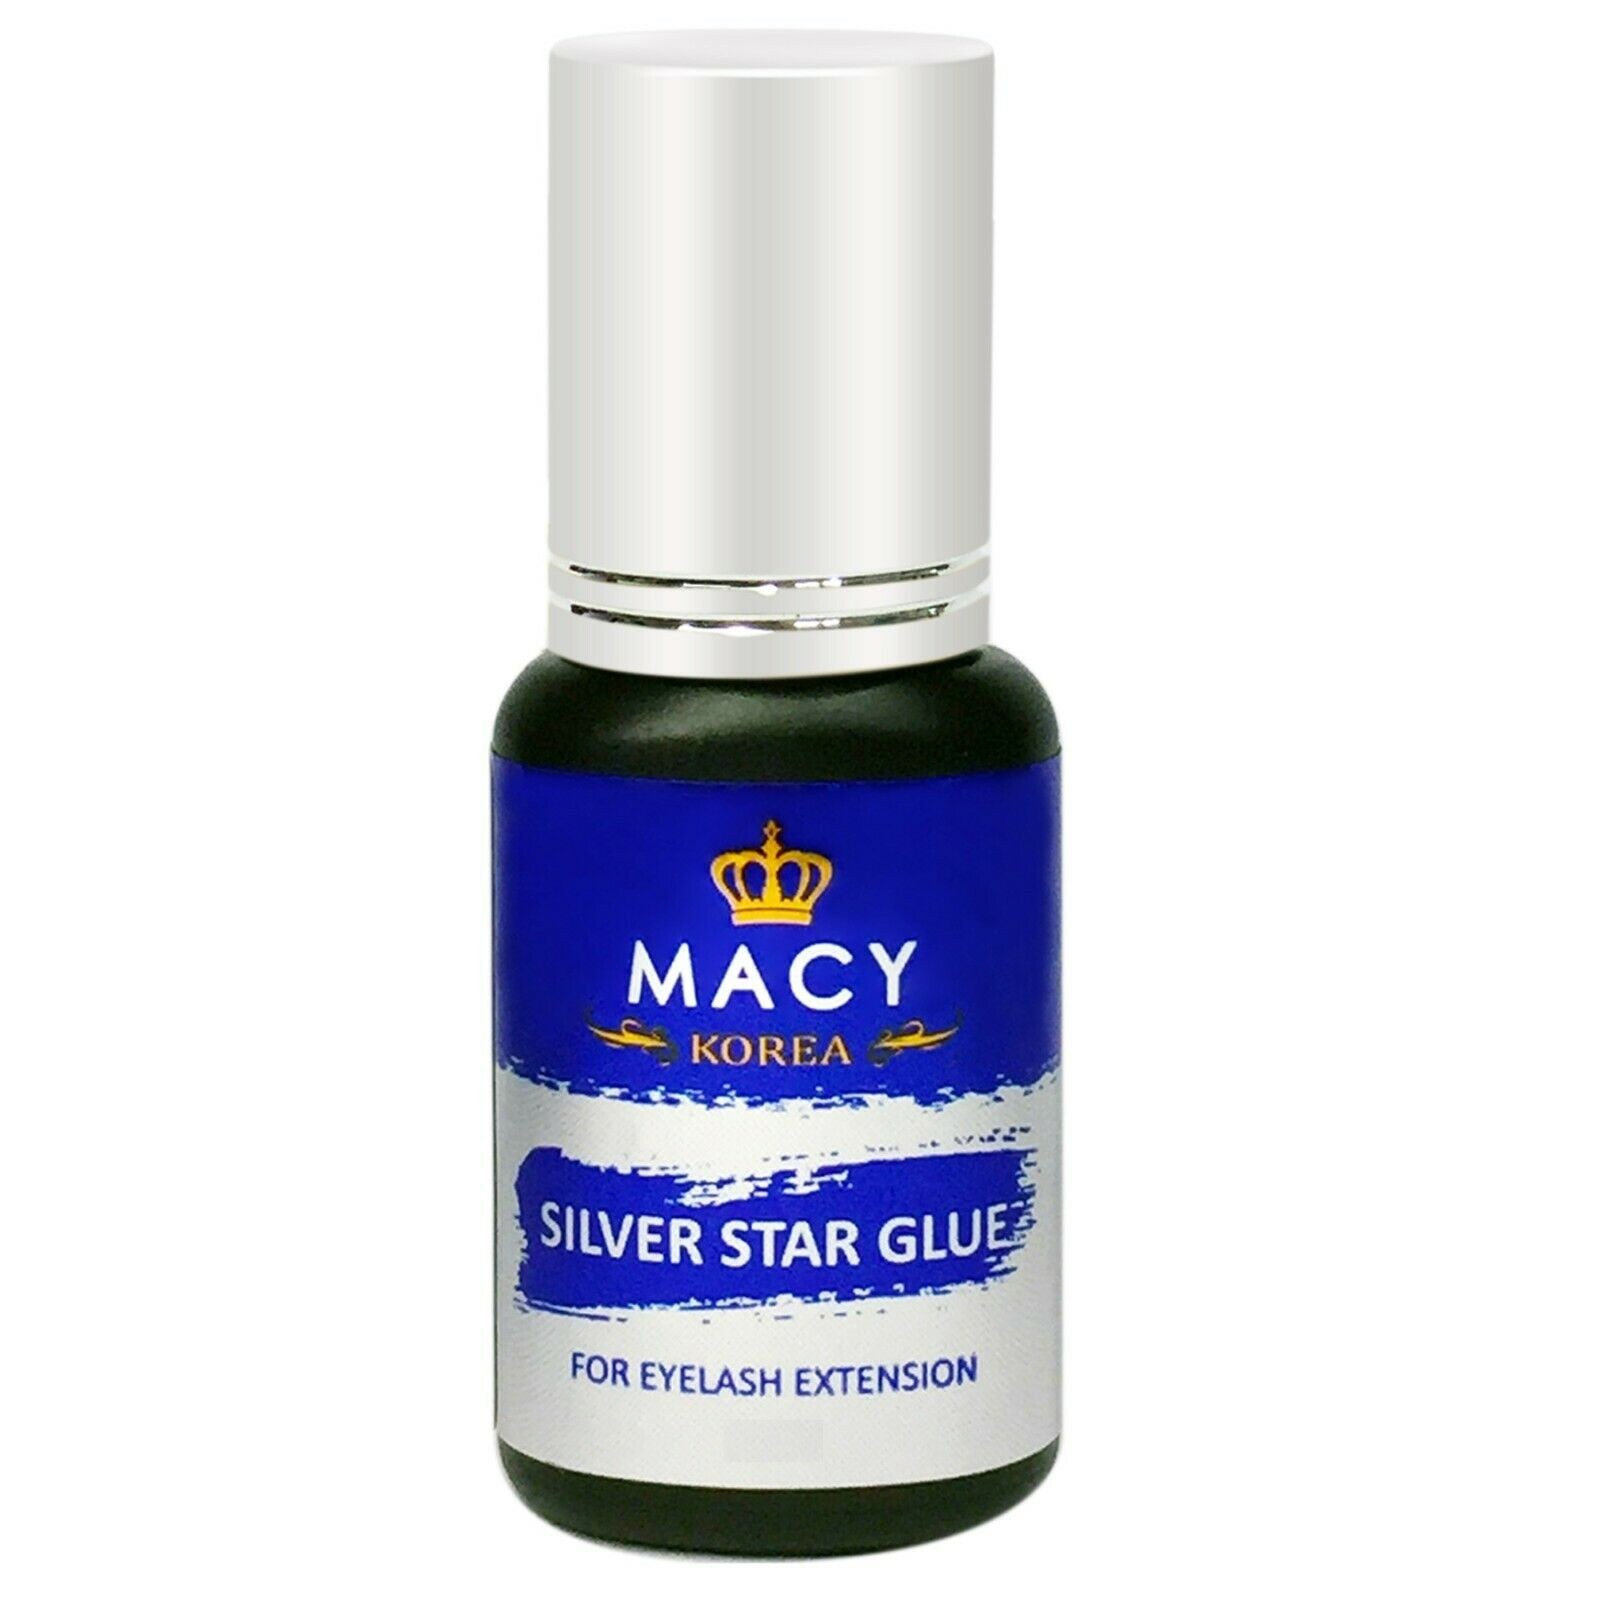 Macy Glue Wimpernkleber "Silver Star" 5g